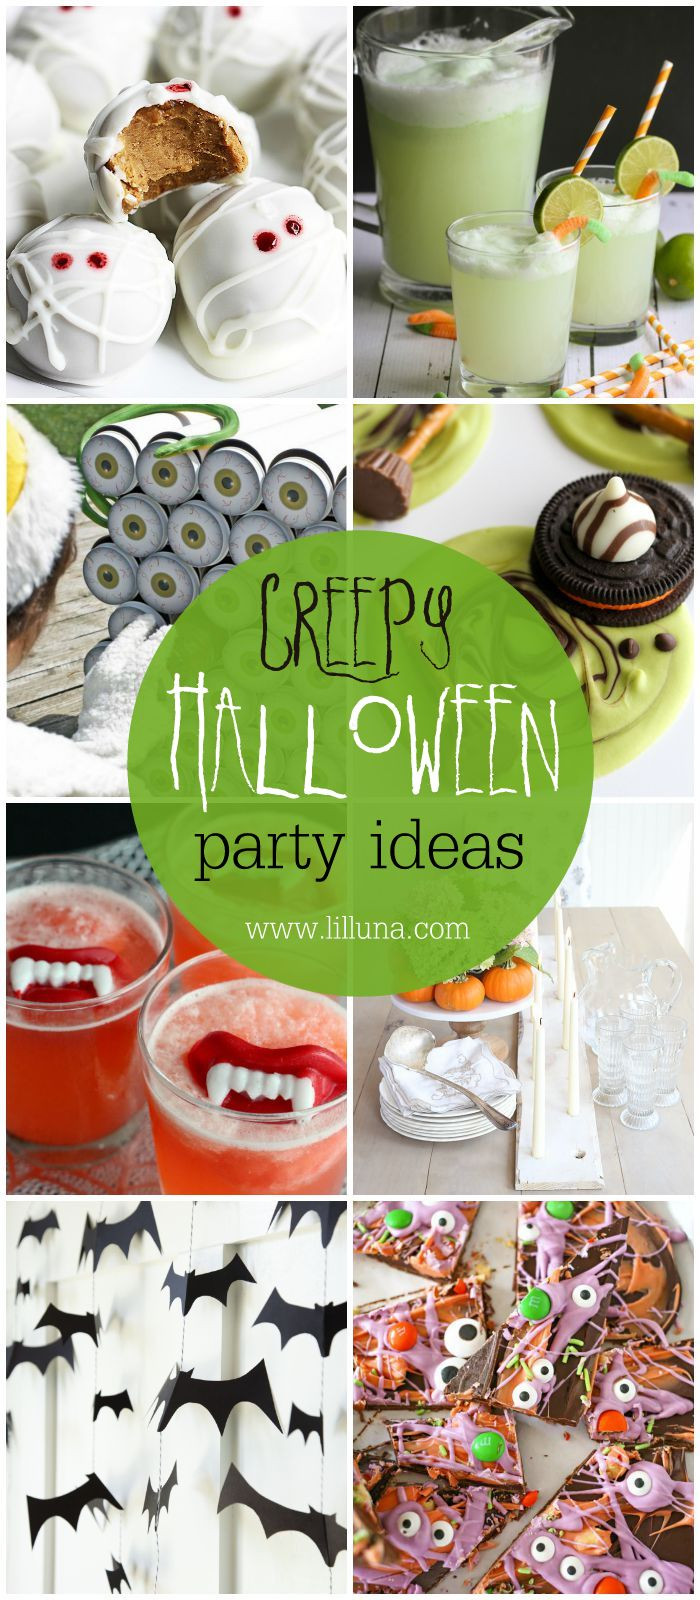 Great Halloween Party Ideas
 Halloween Party Ideas